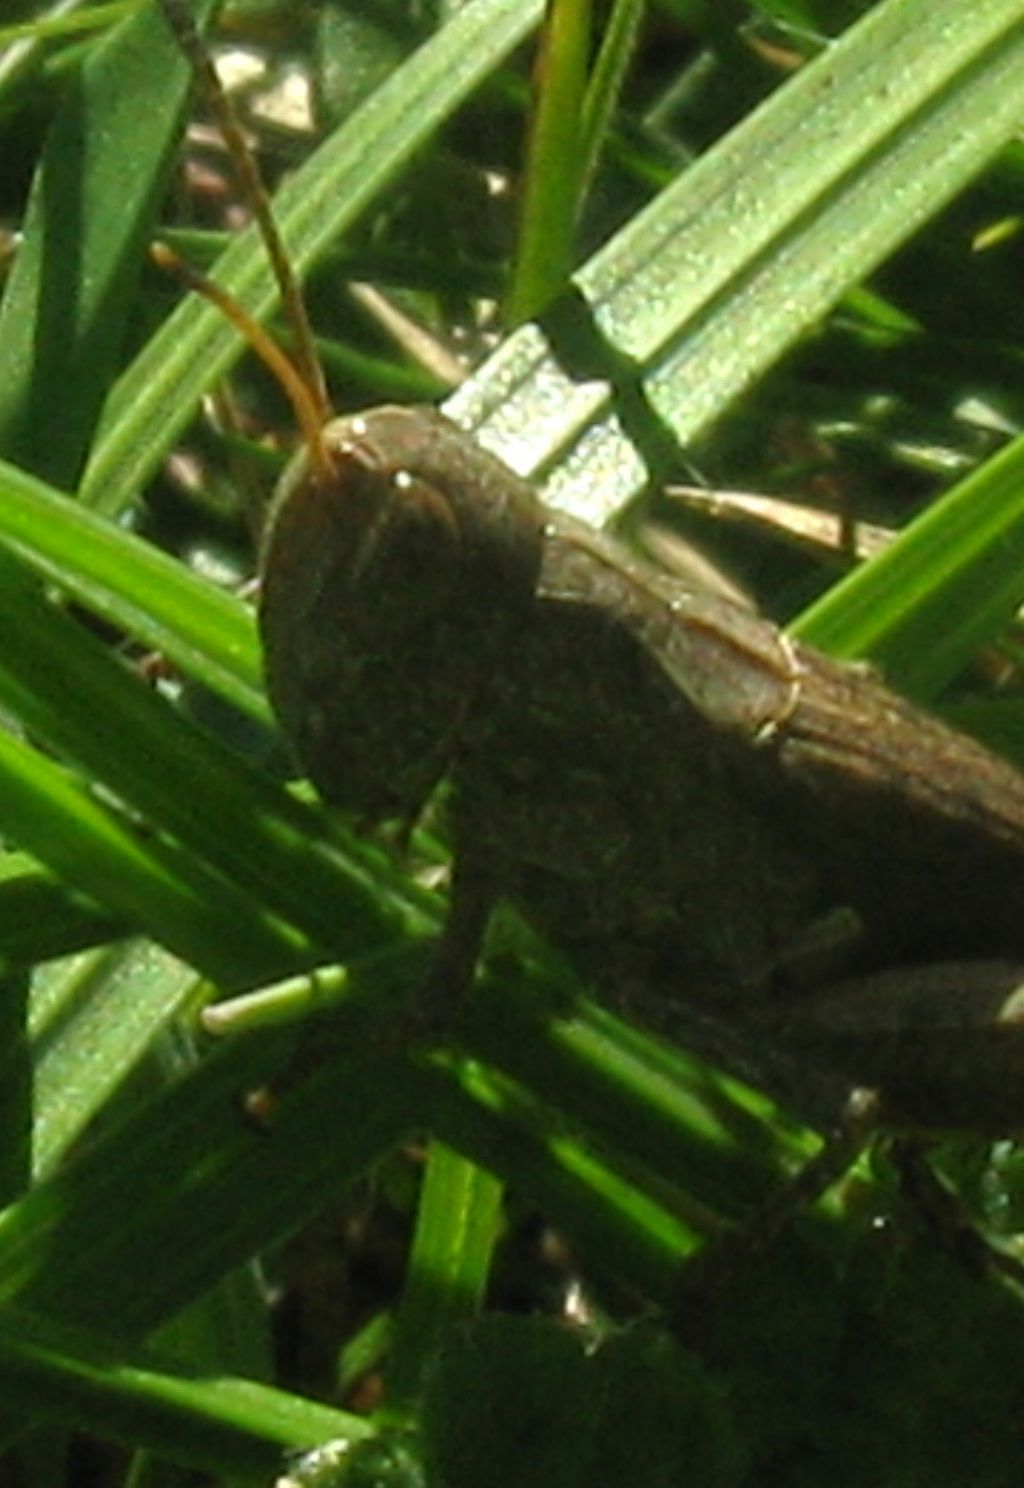 Acrididae: Glyptobothrus cfr. brunneus